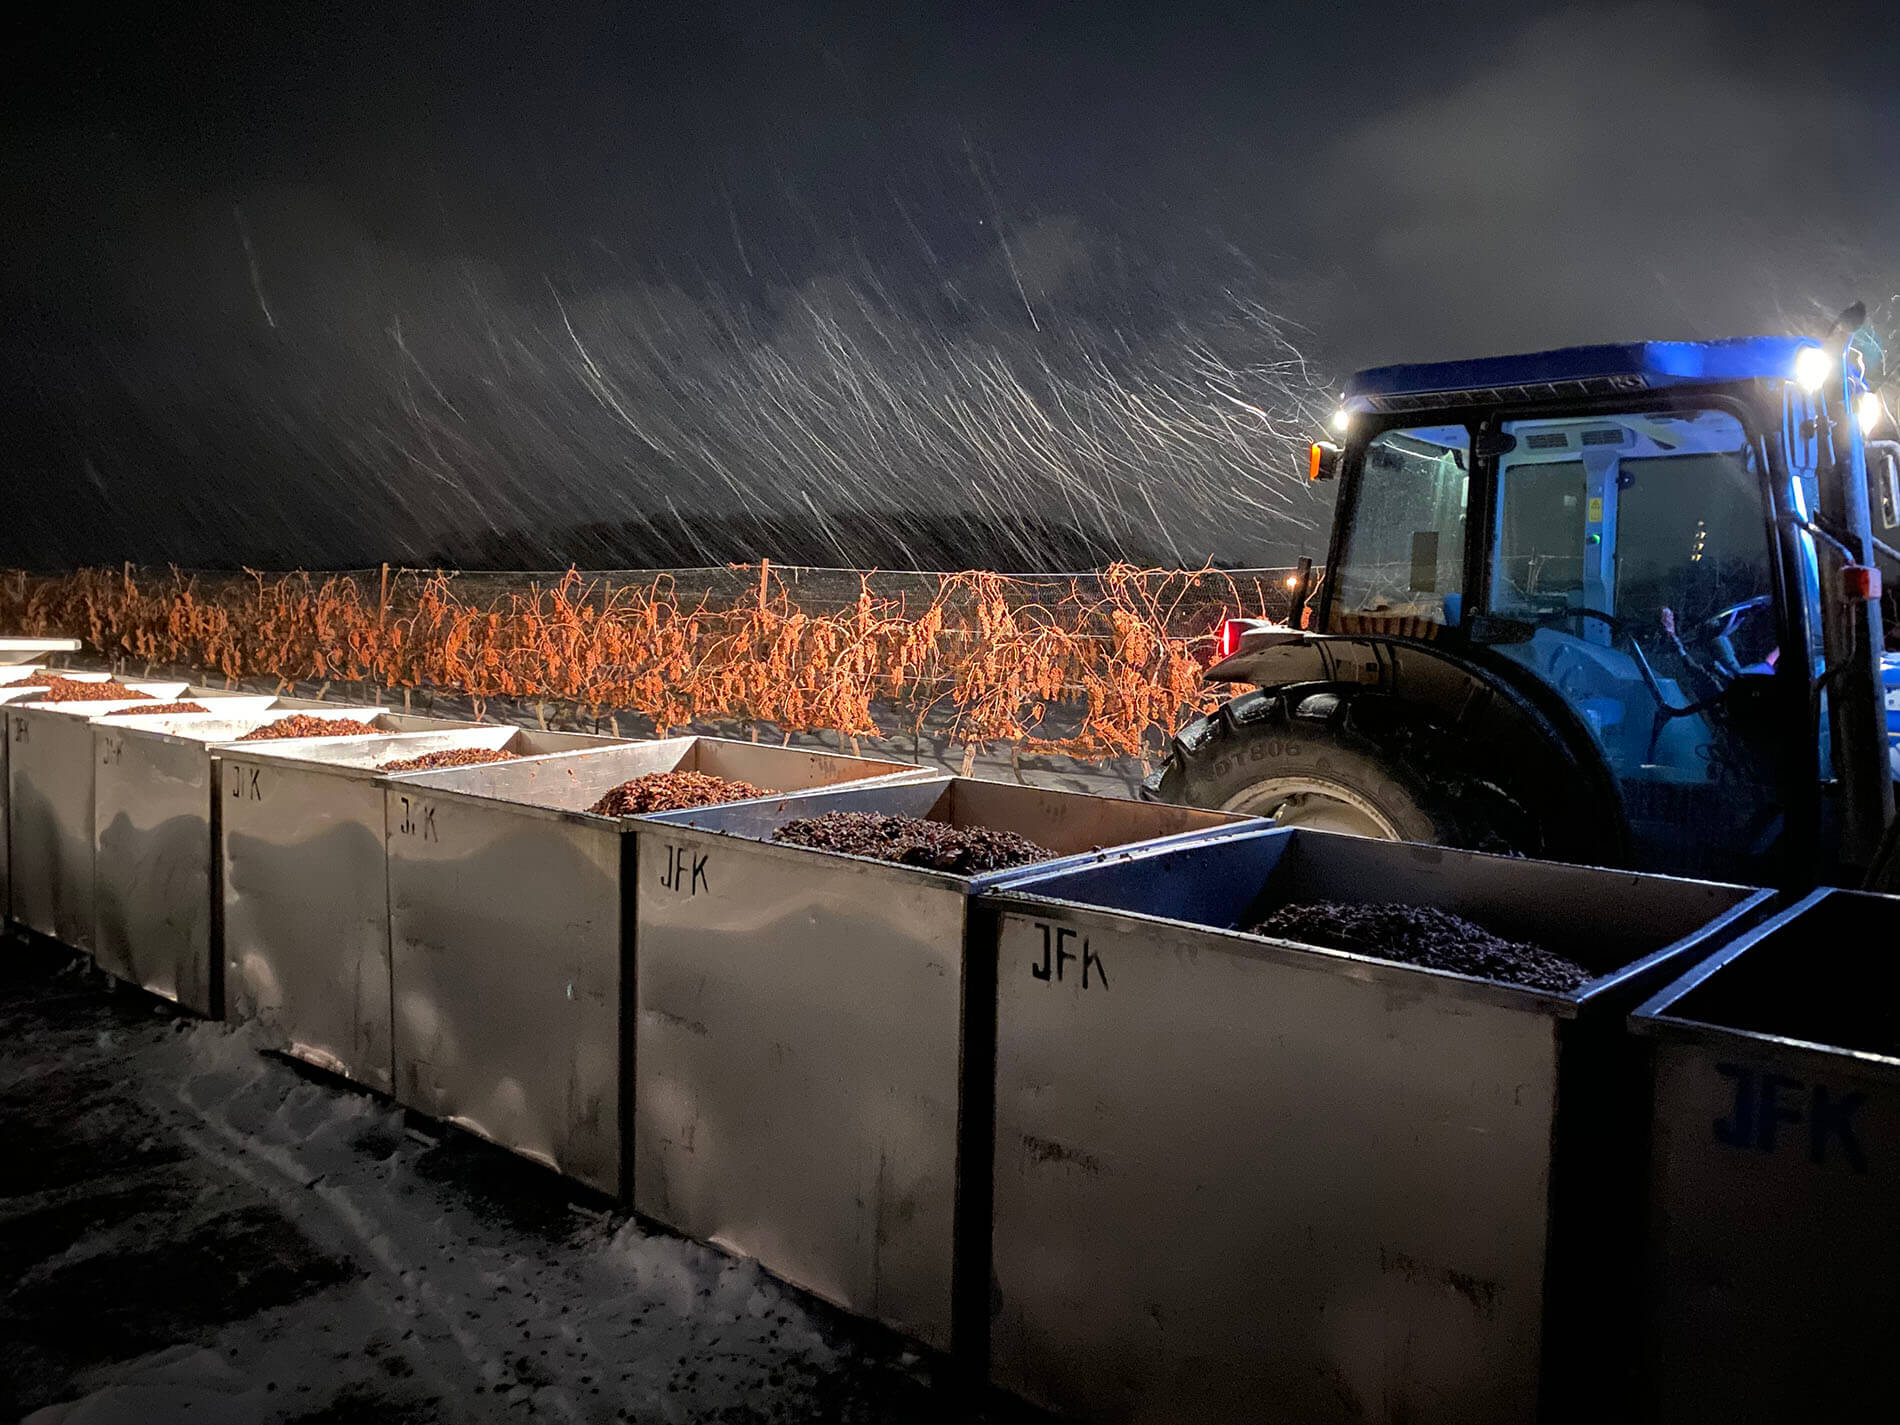 Icewine - harvest at night